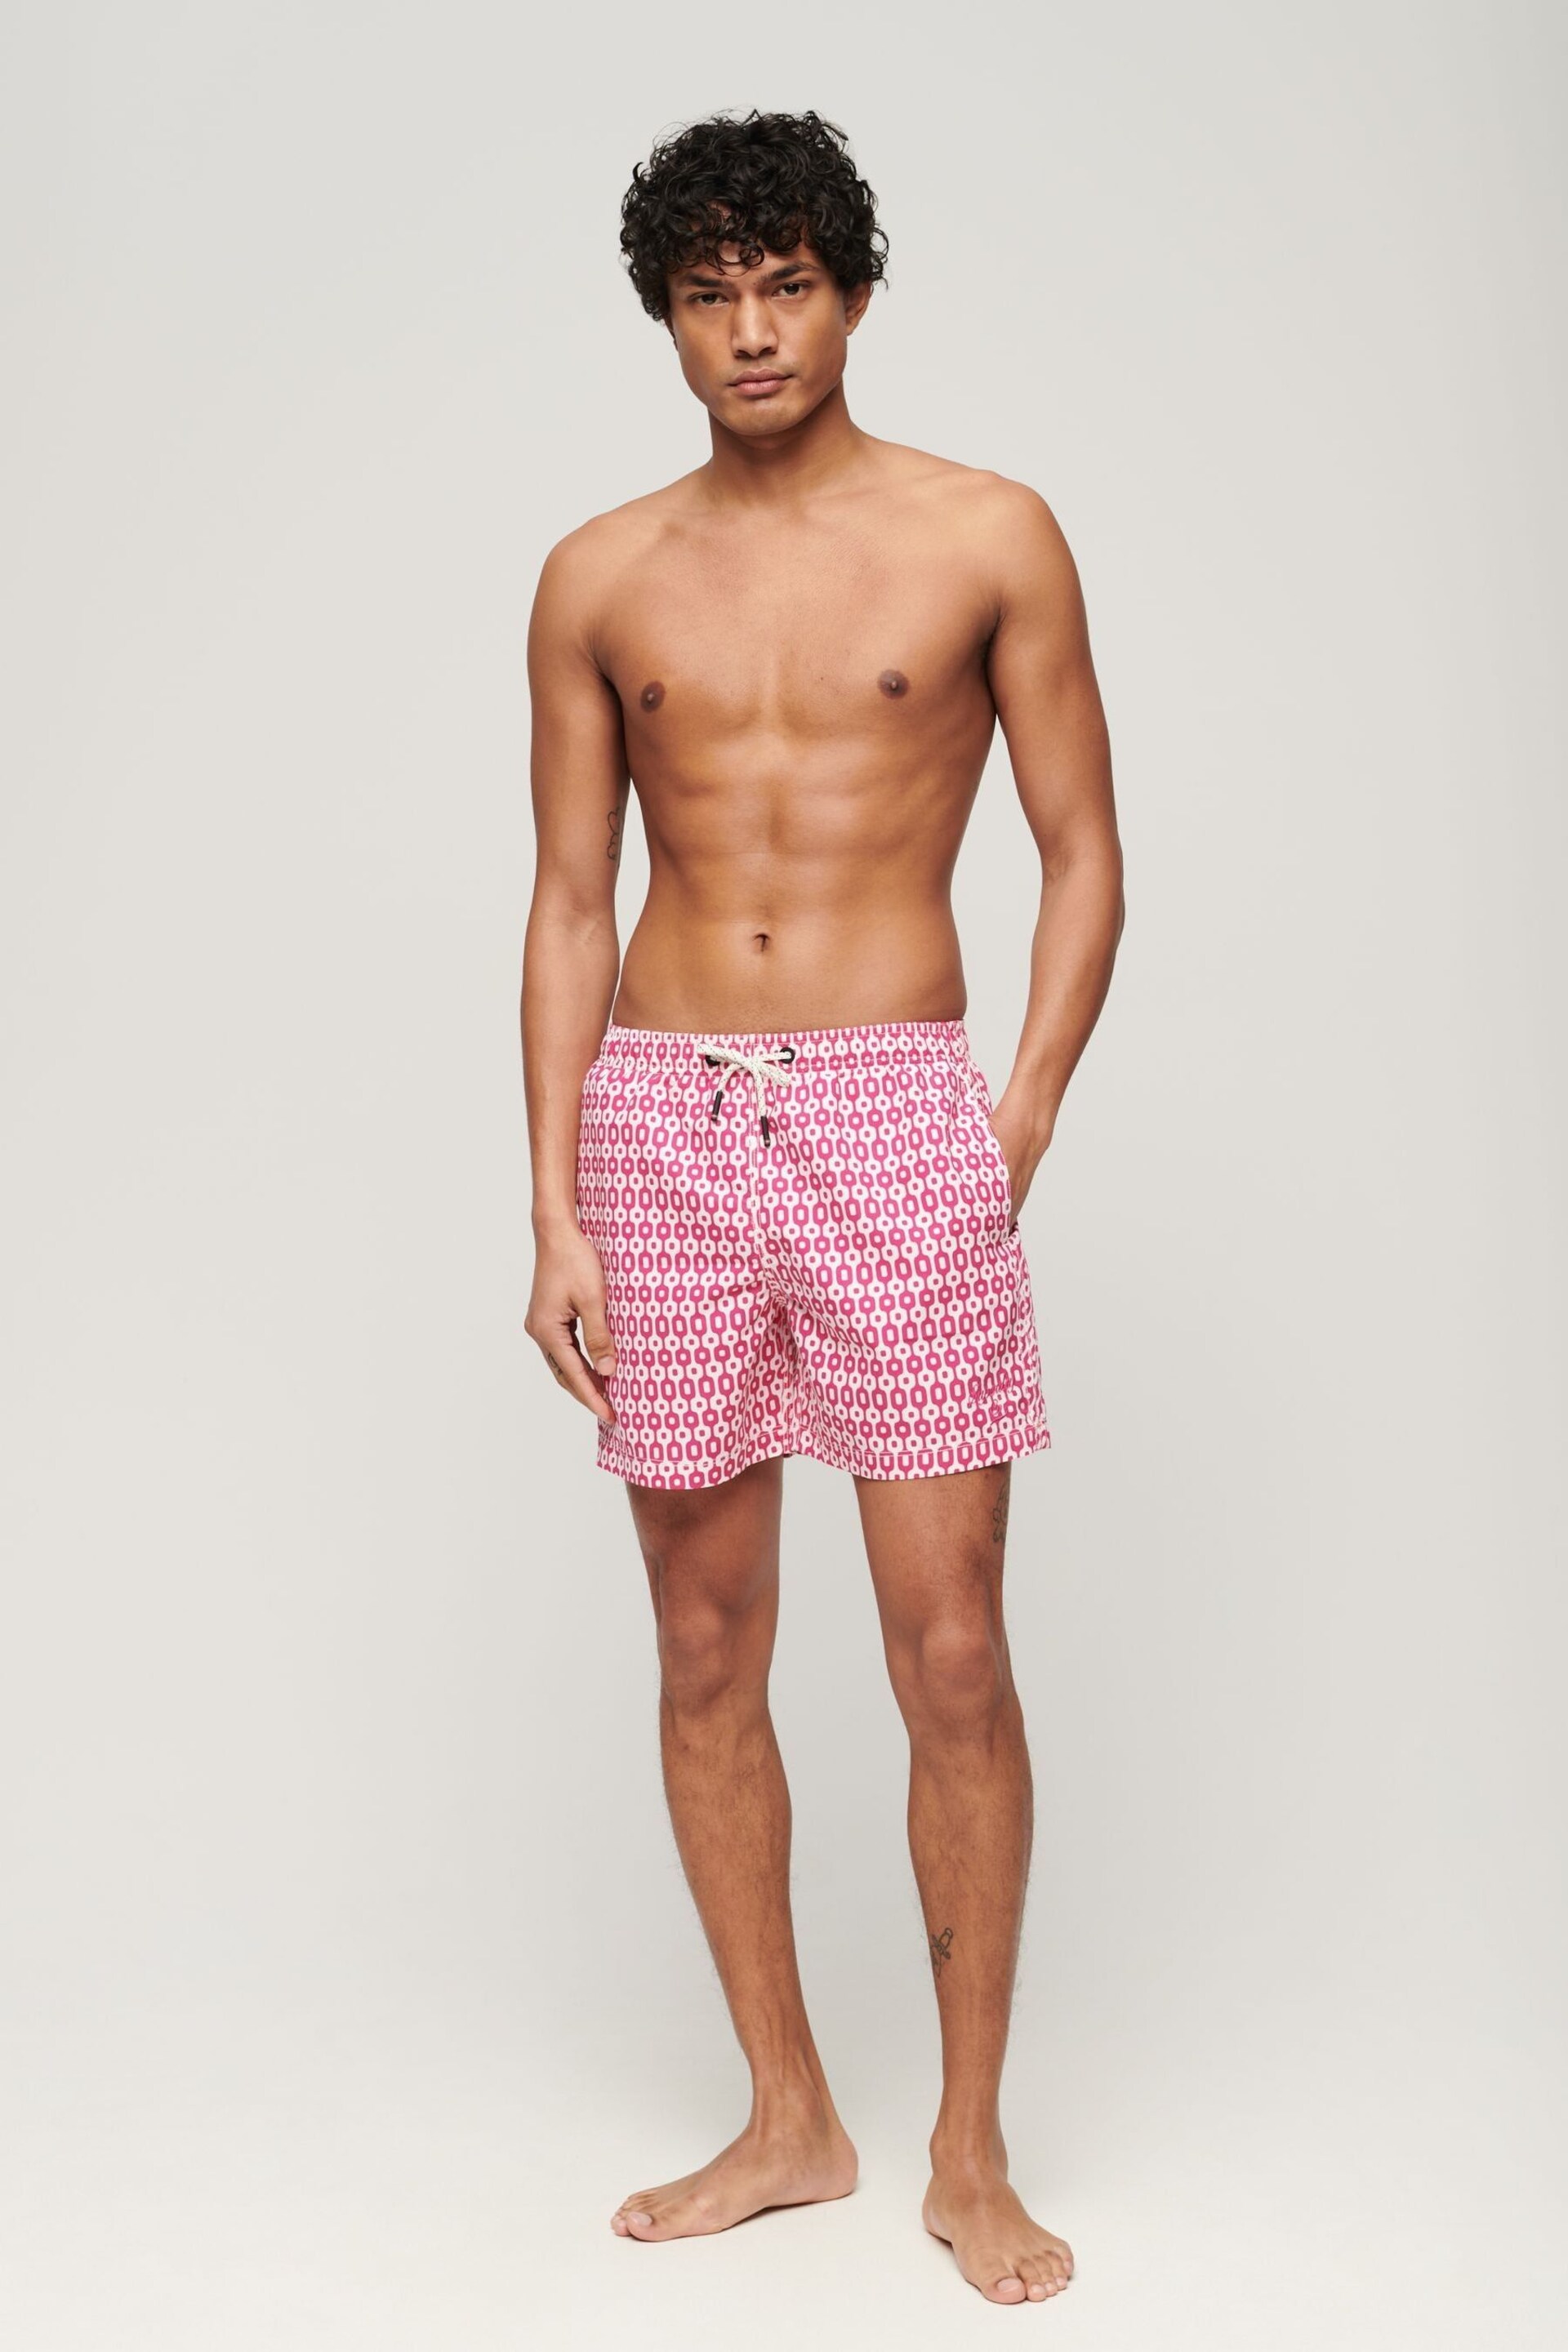 Superdry Pink Geo Print Printed 15" Swim Shorts - Image 3 of 4